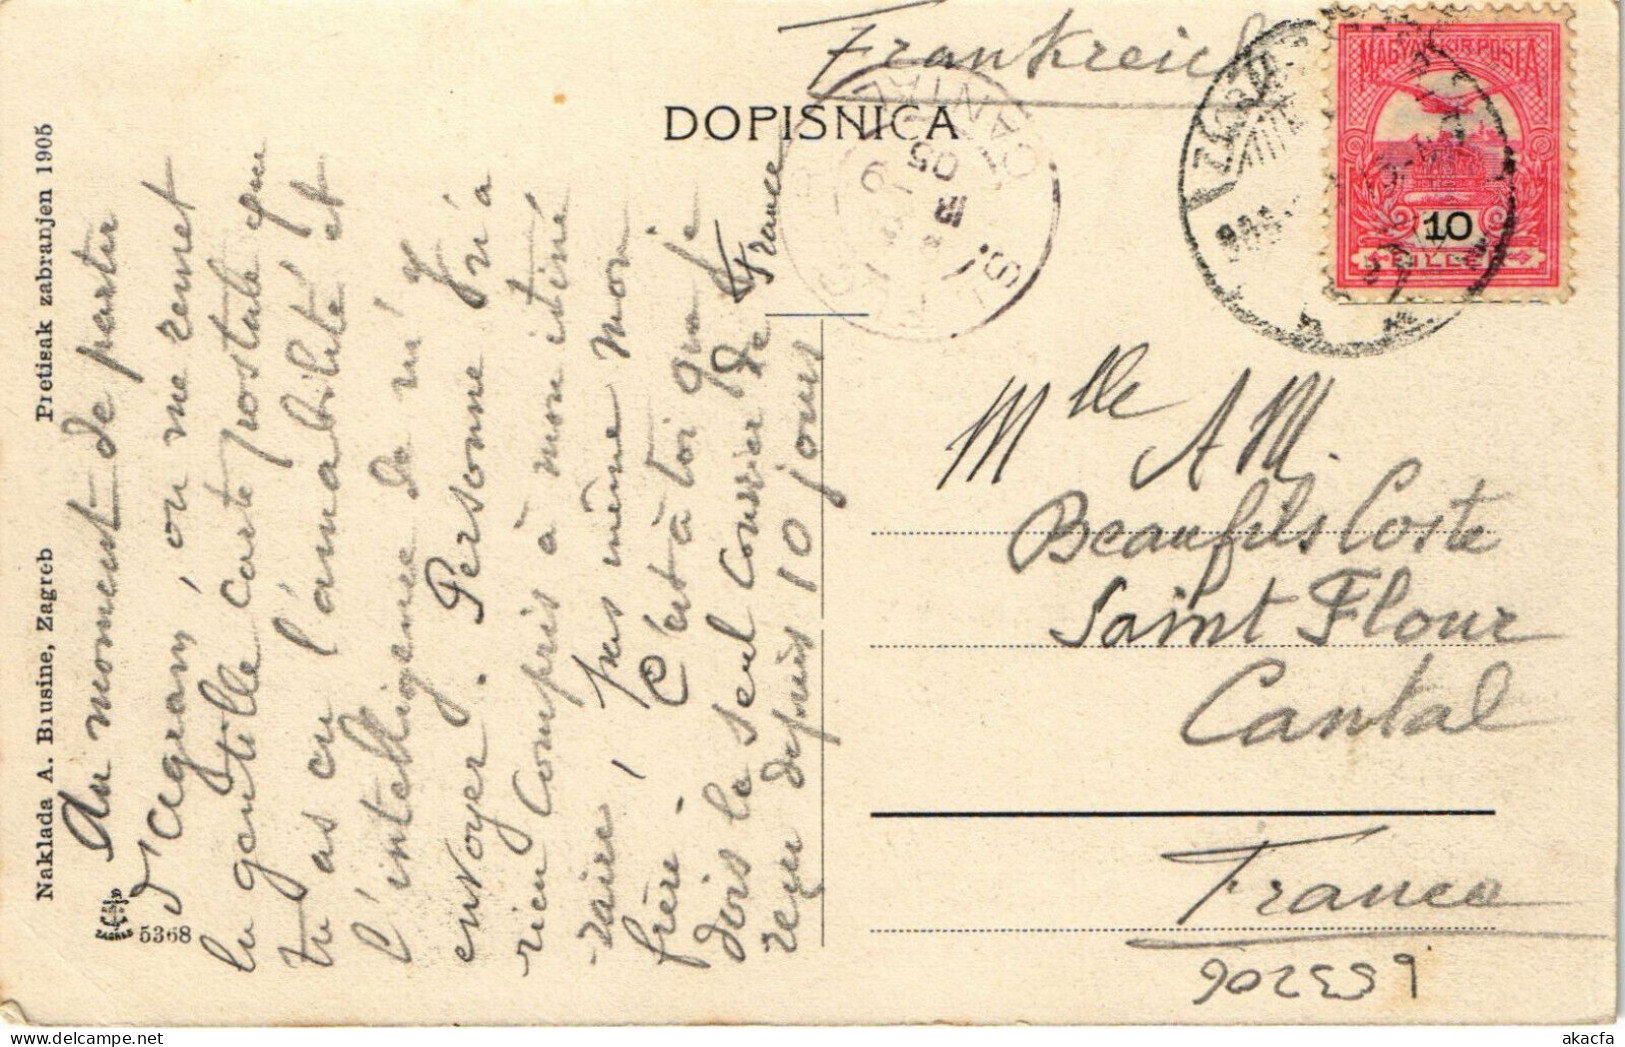 PC CROATIA, ZAGREB, CRKVA SV. MARKA, Vintage Postcard (b53206) - Croacia